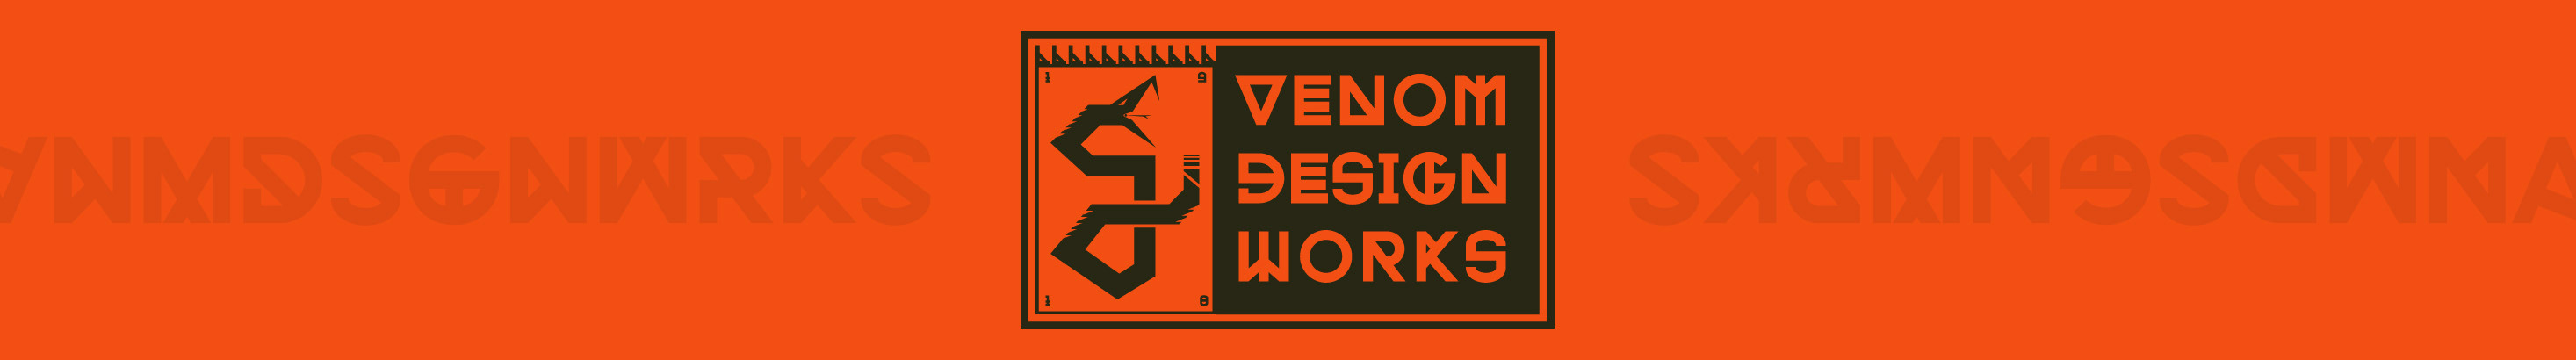 Venom Design Works -s profilbanner